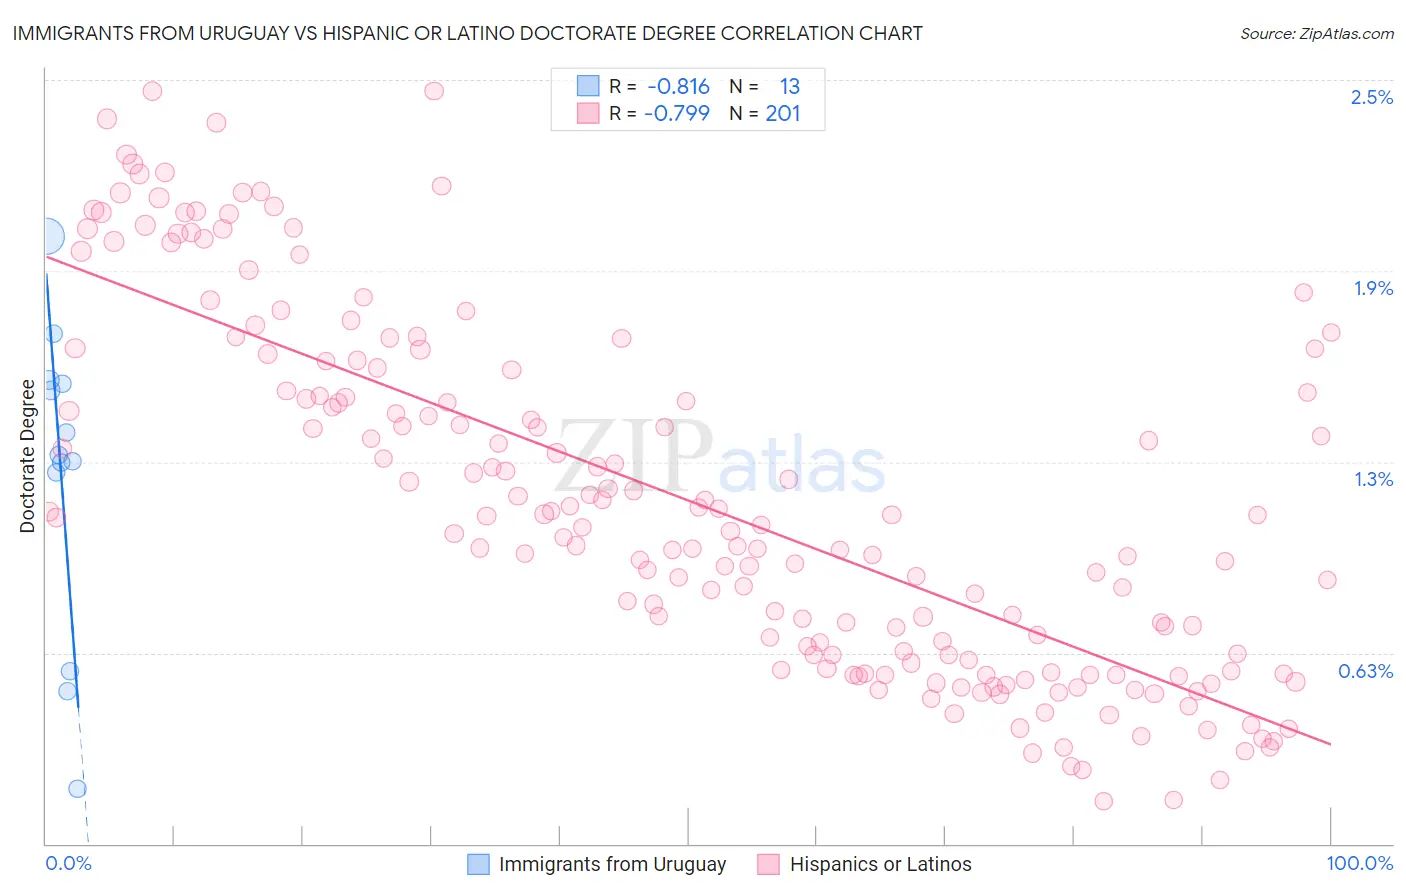 Immigrants from Uruguay vs Hispanic or Latino Doctorate Degree